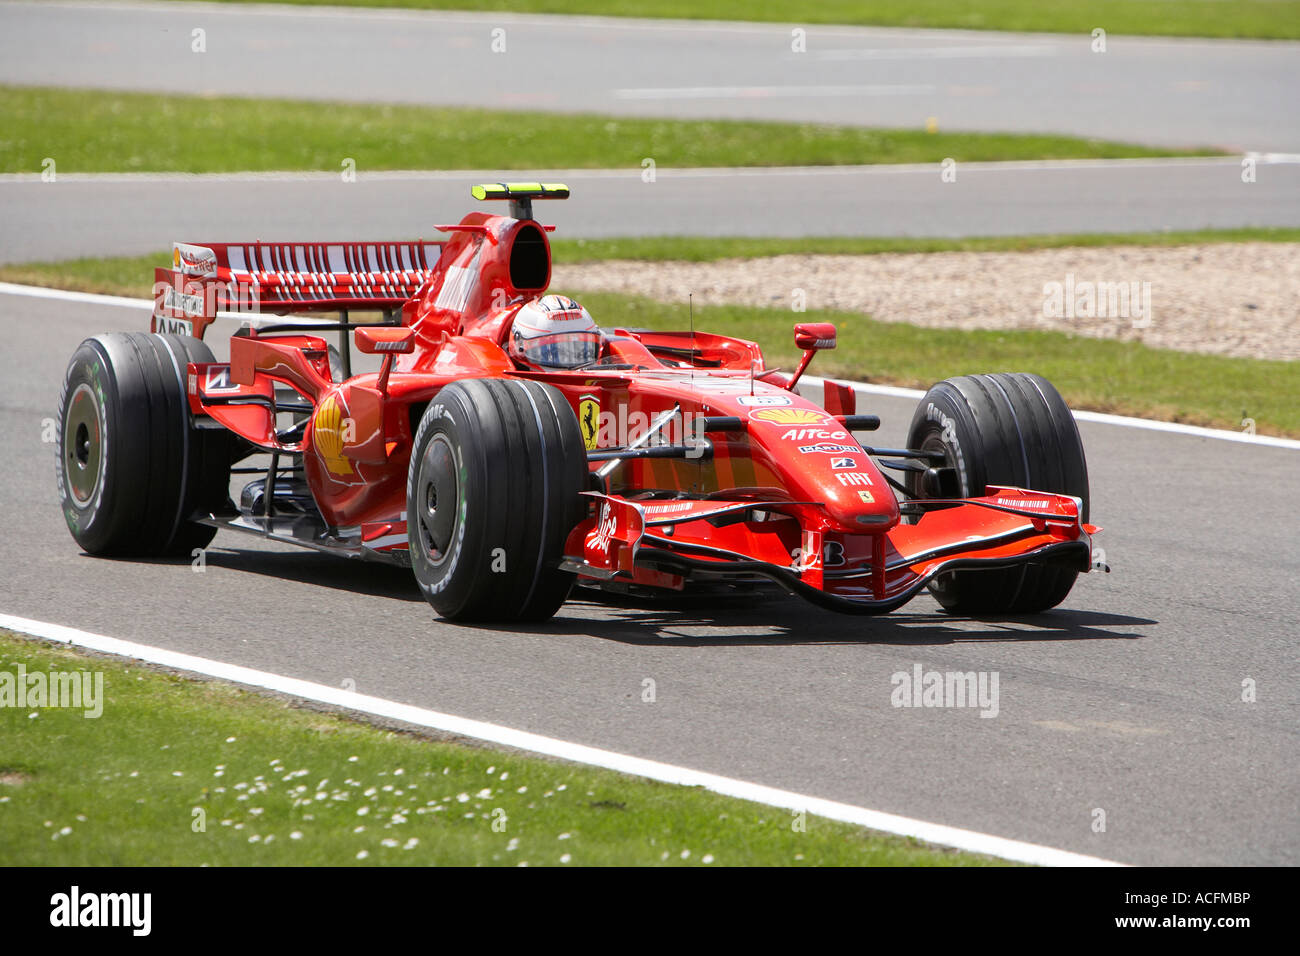 Kimi Raikkonen in his Ferrari at the British Grand Prix Stock Photo